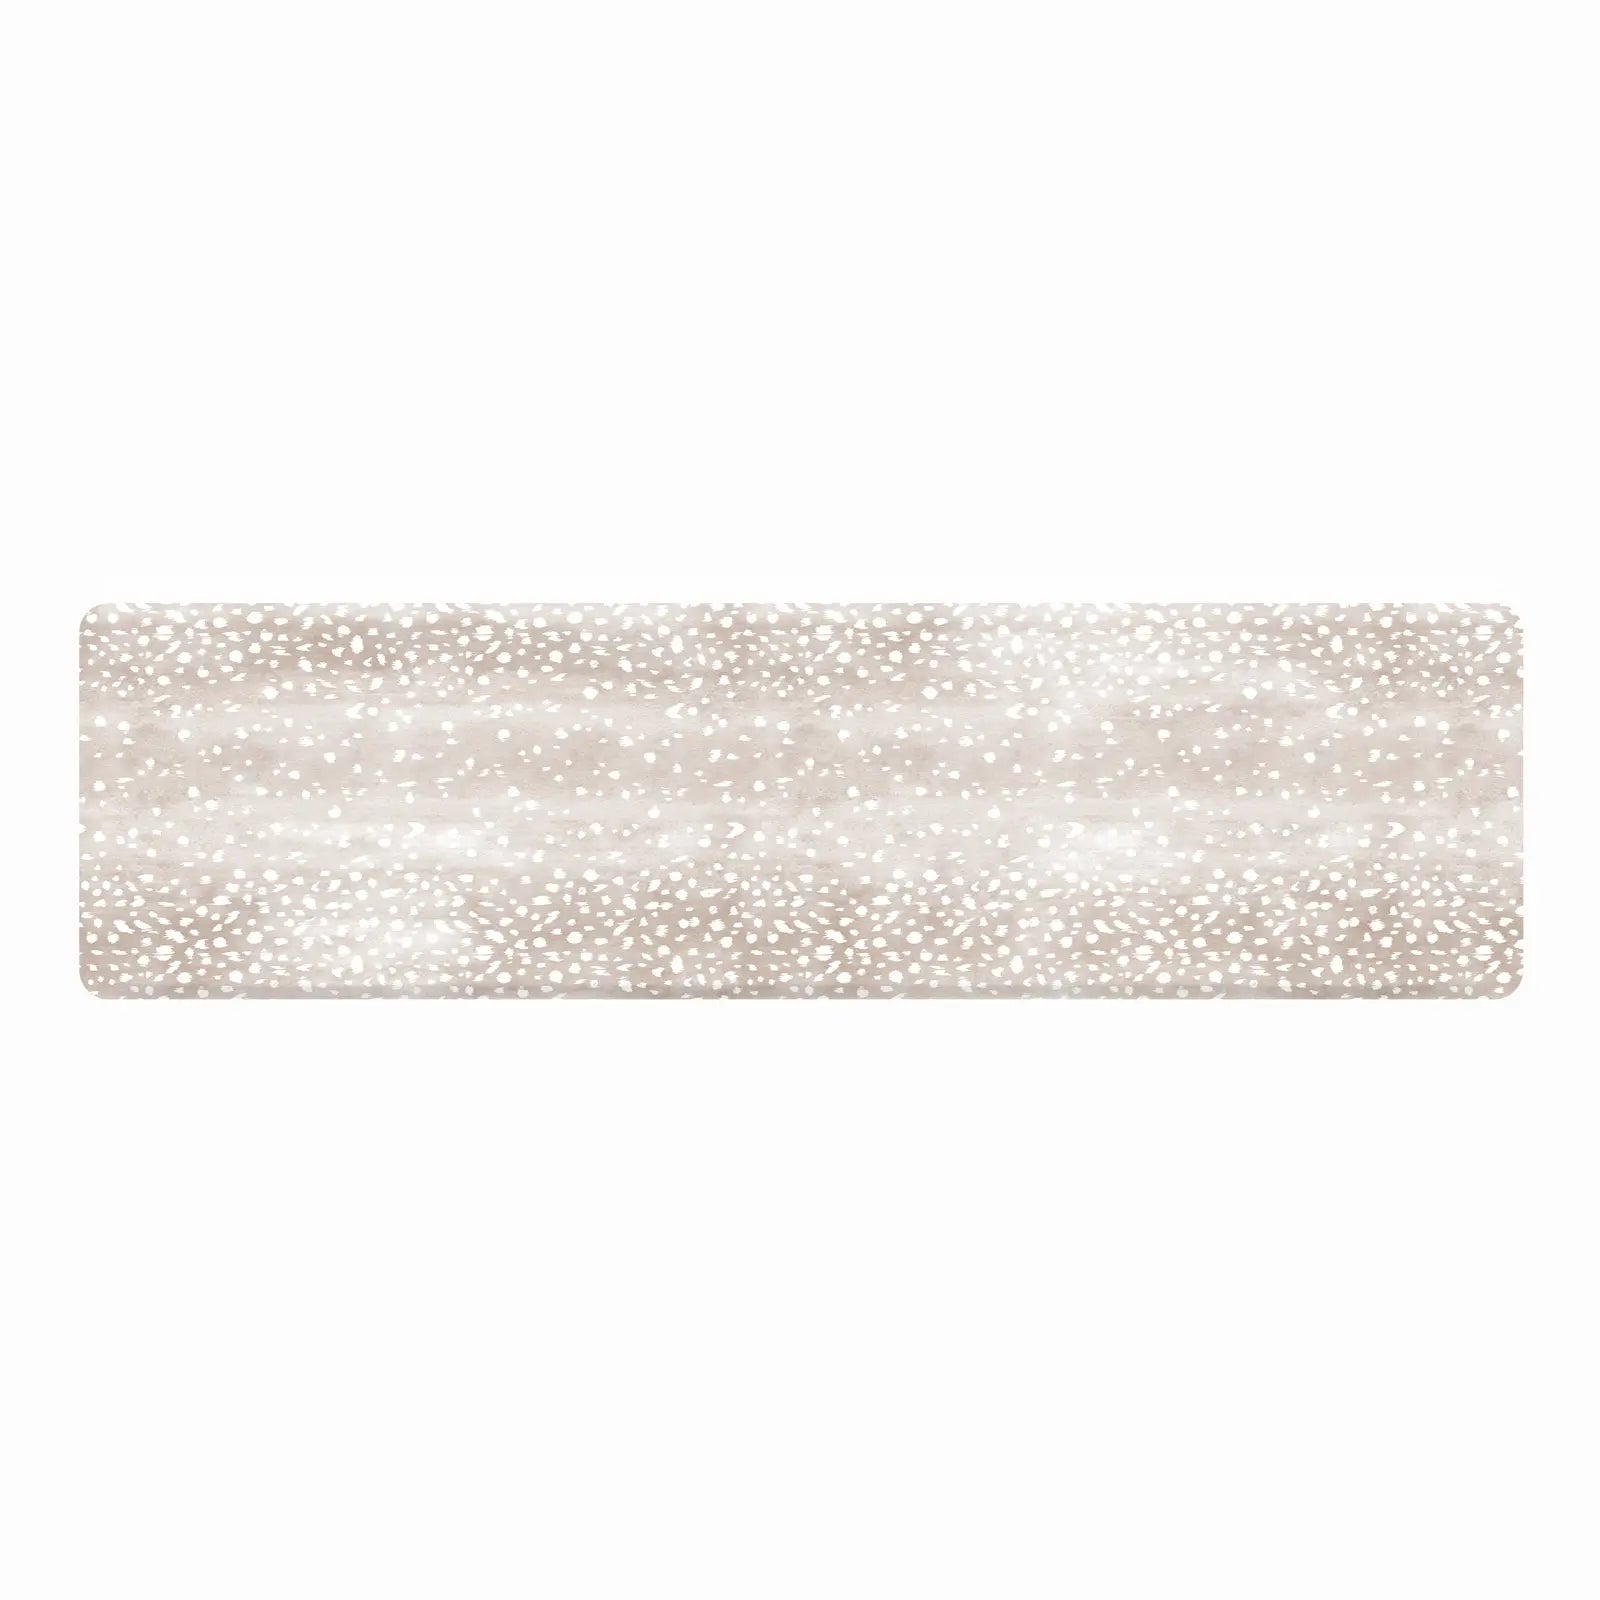 Fawn brown neutral animal print kitchen mat shown in size 30x108